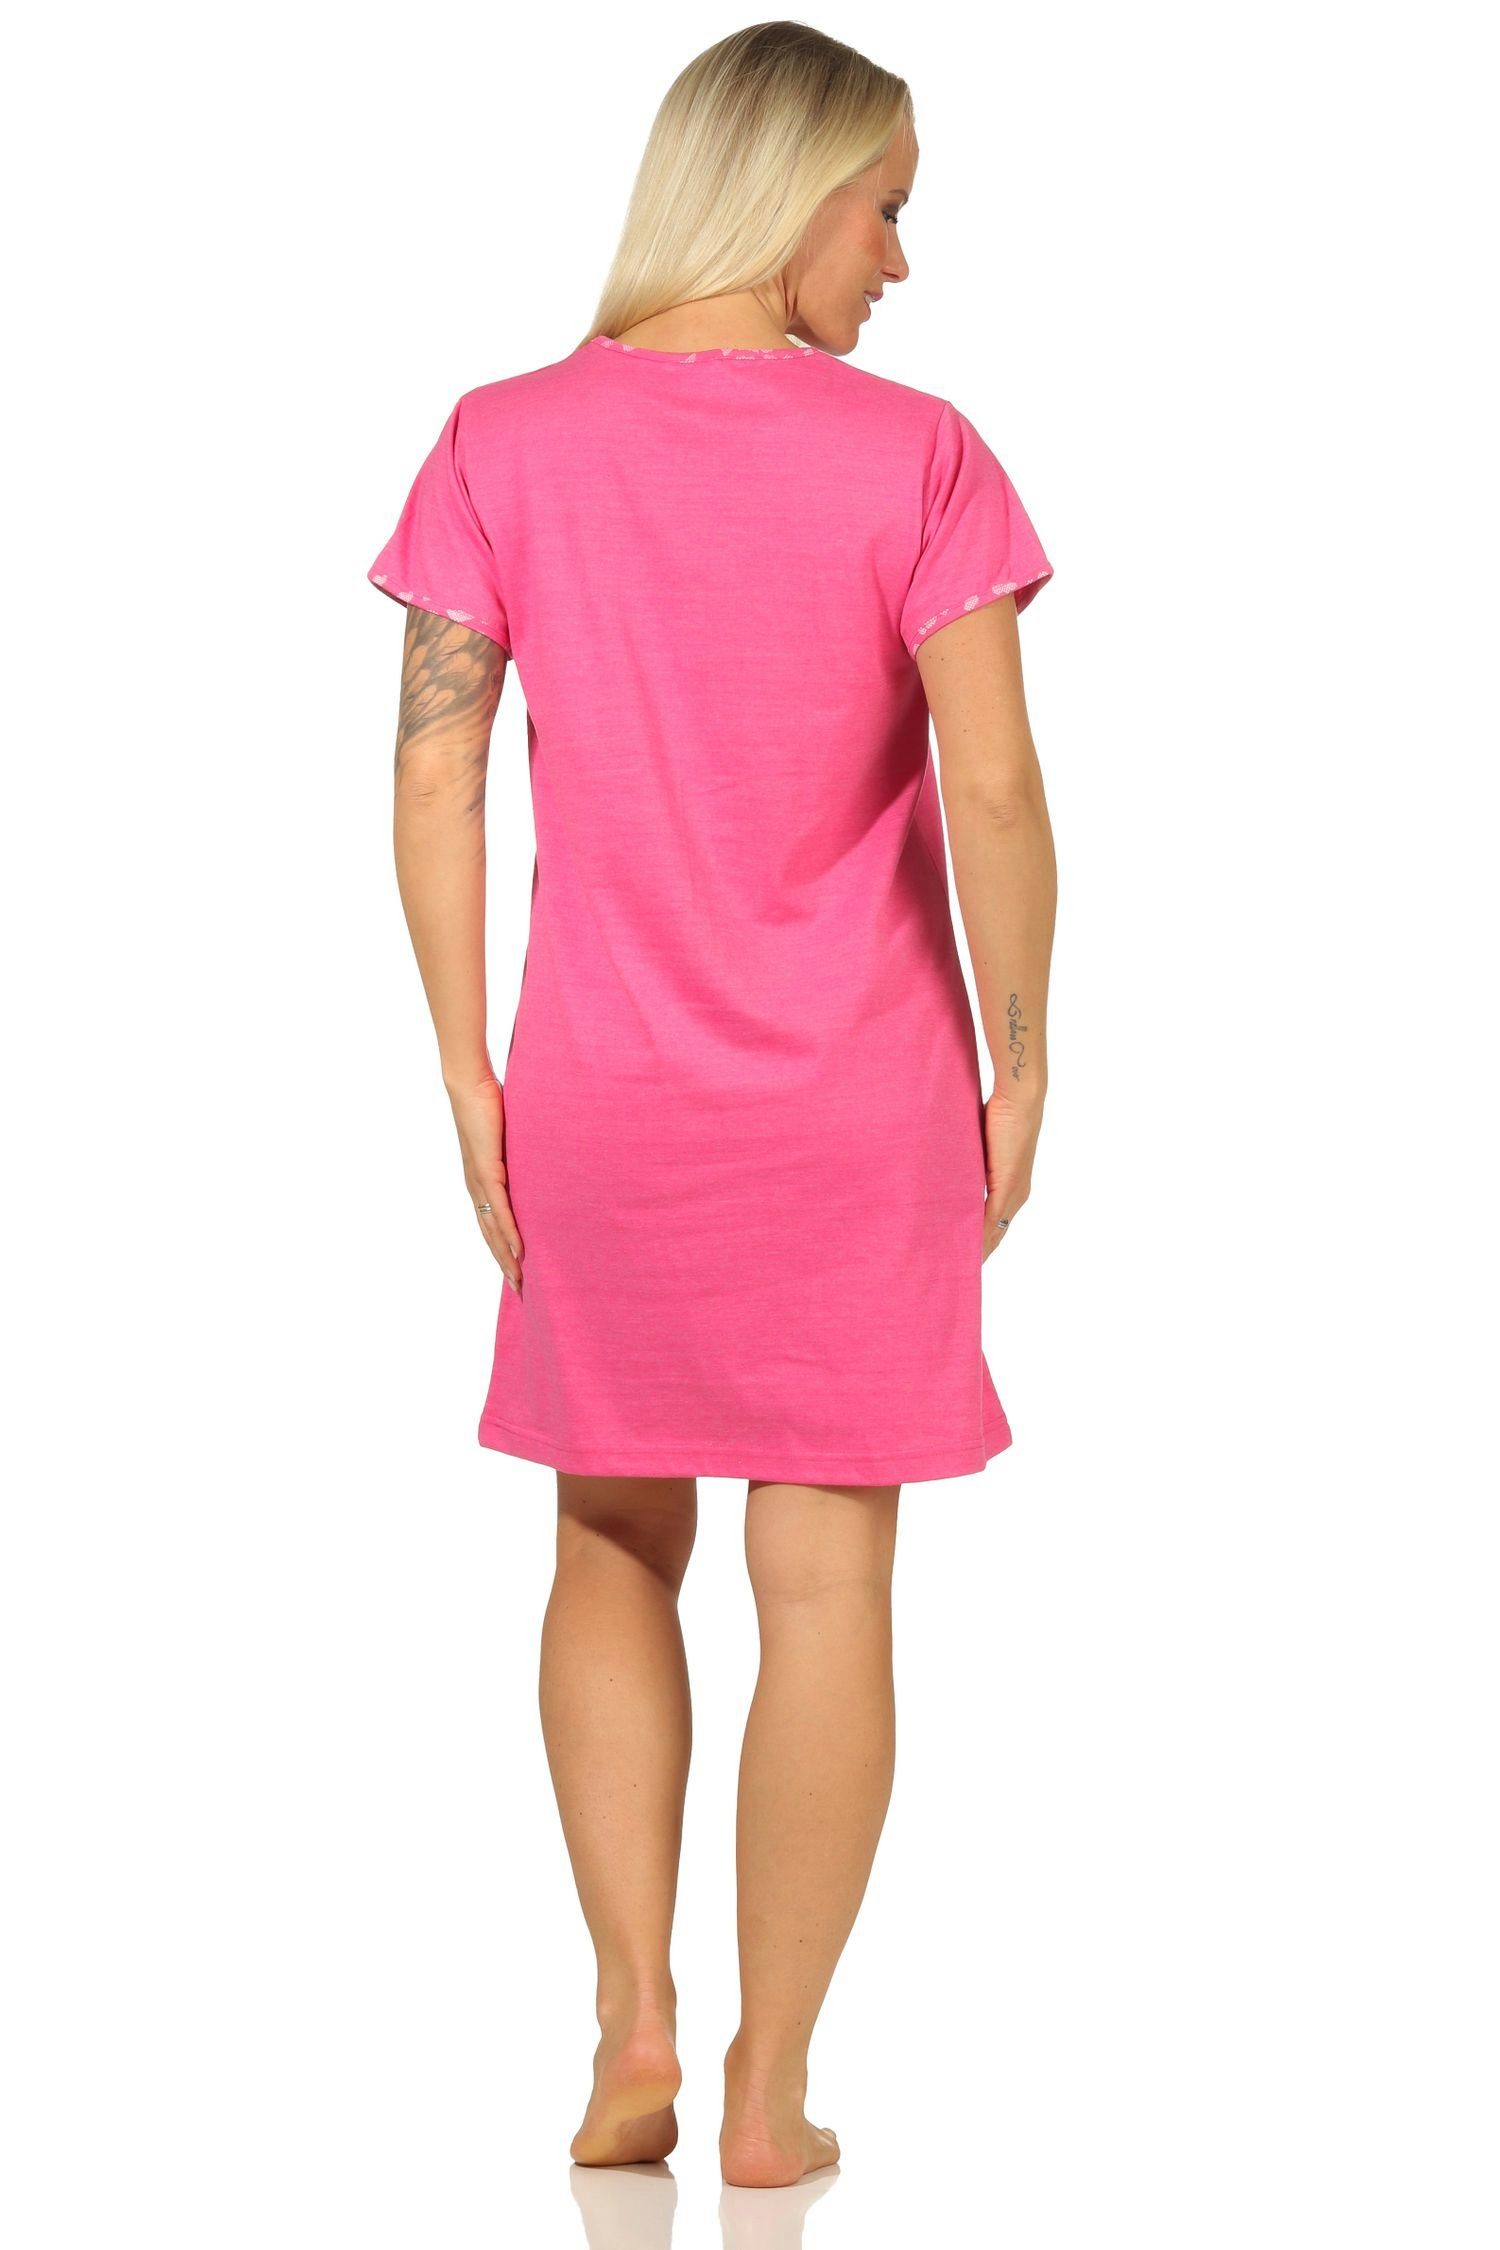 RELAX by Normann Motiv 67140 Damen tollem pink kurzarm - Nachthemd Nachthemd mit